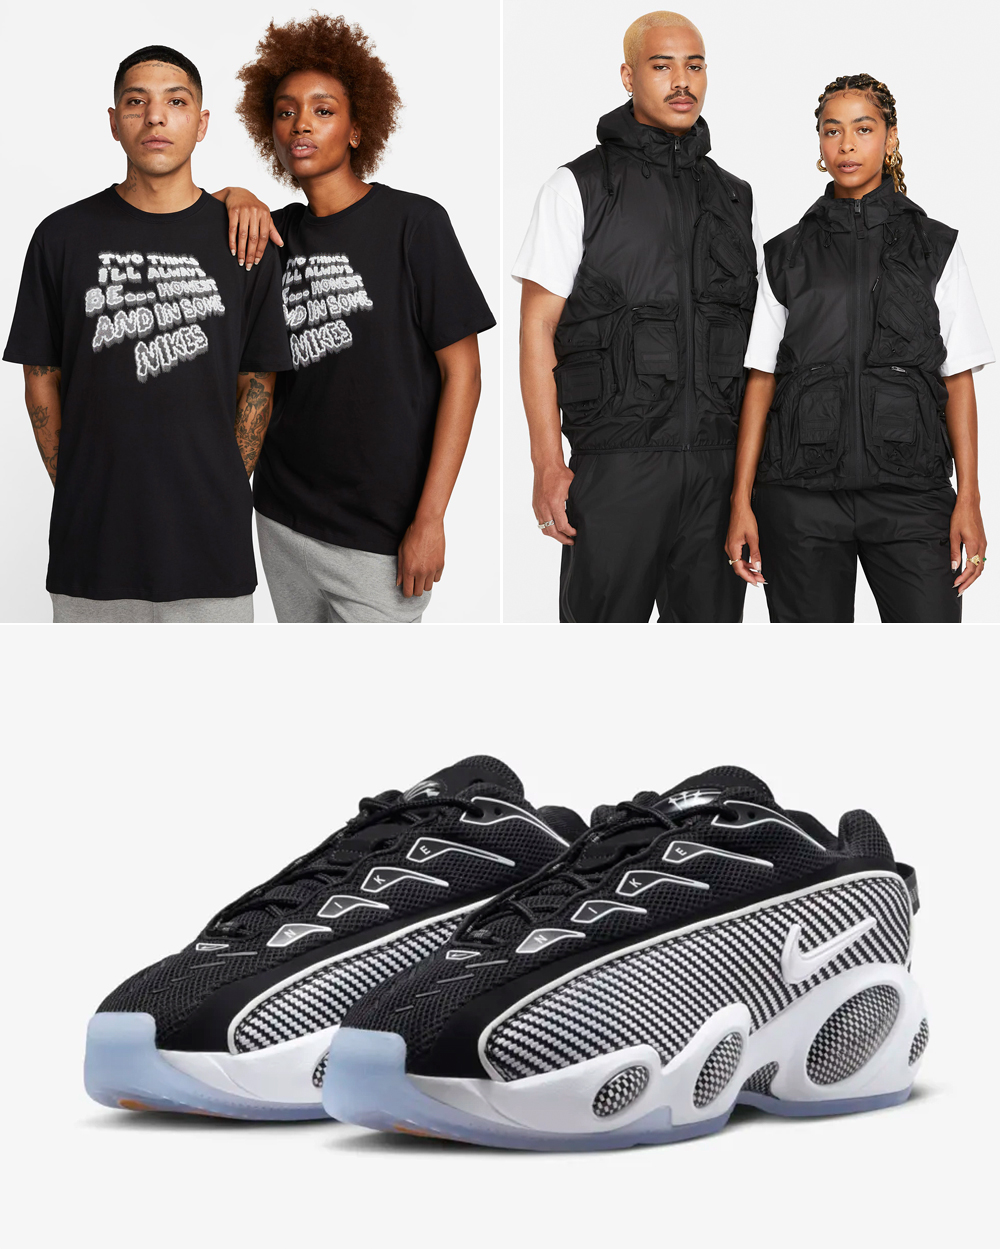 Nike-Nocta-Glide-Black-White-Outfits